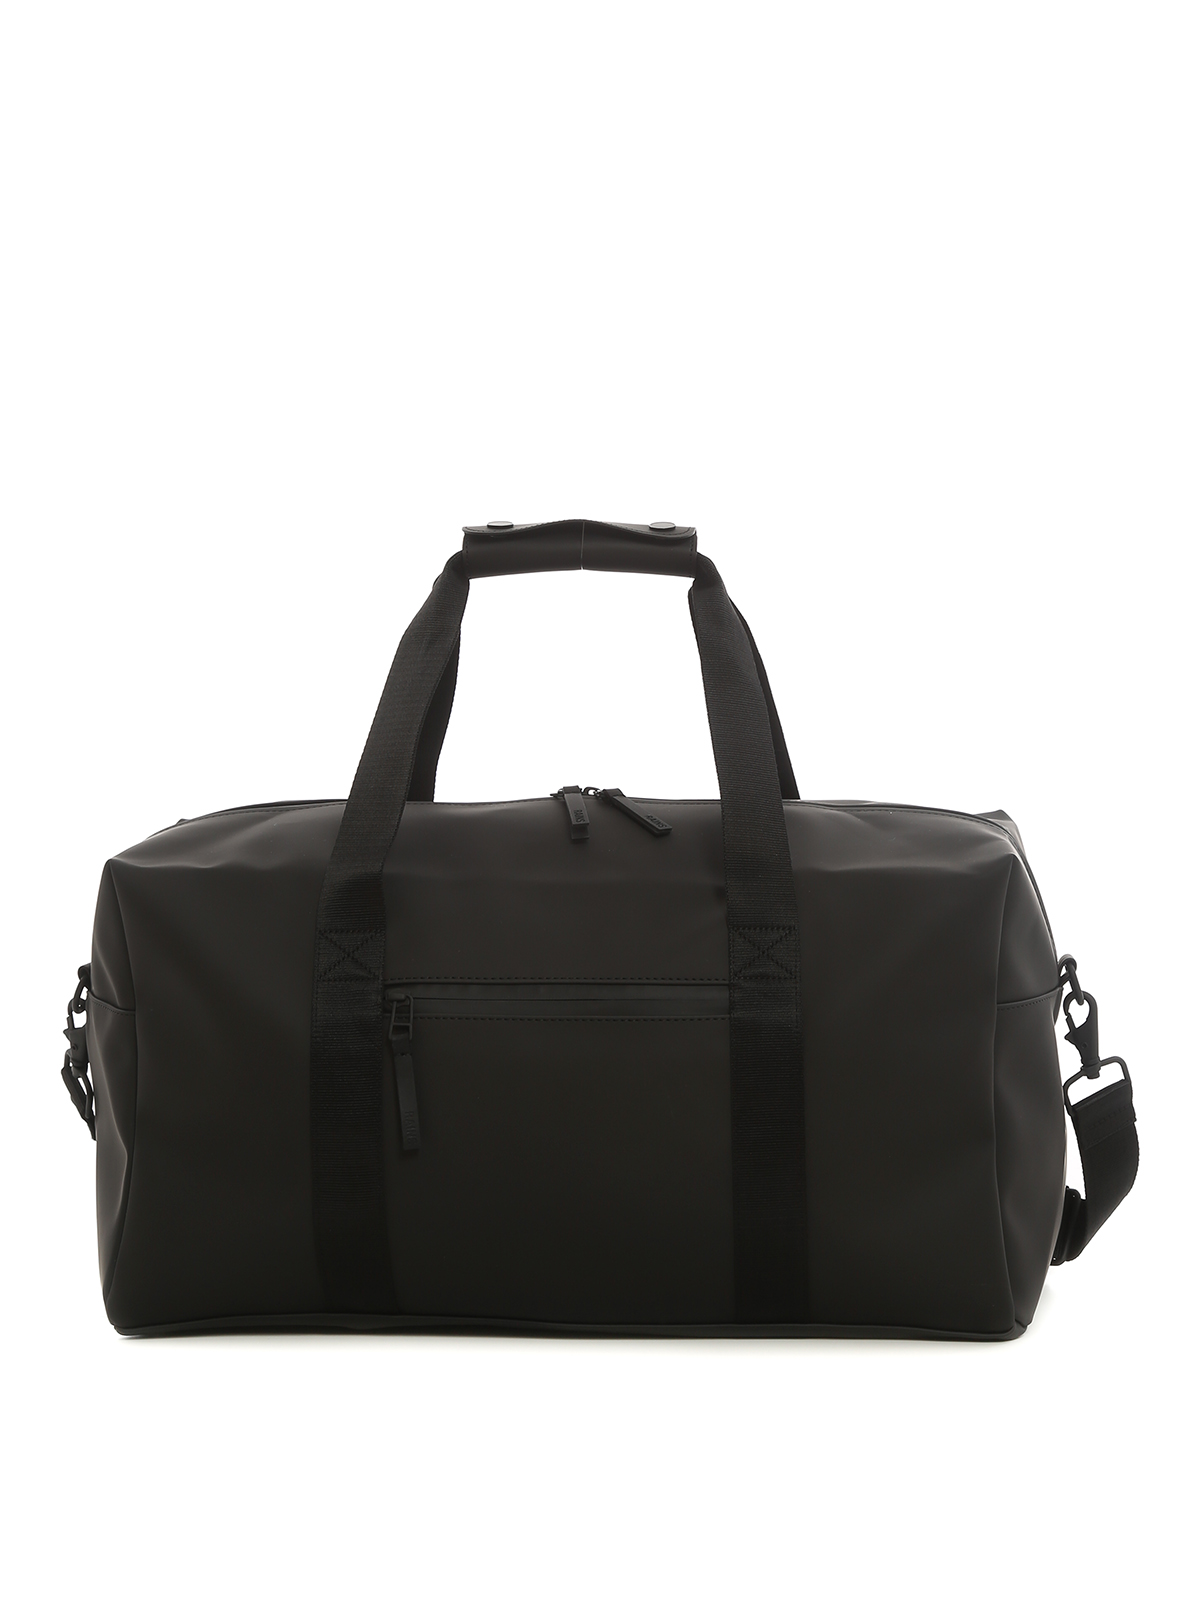 Luggage & Travel bags Rains - Gym bag - 13380BLACK | Shop online at iKRIX